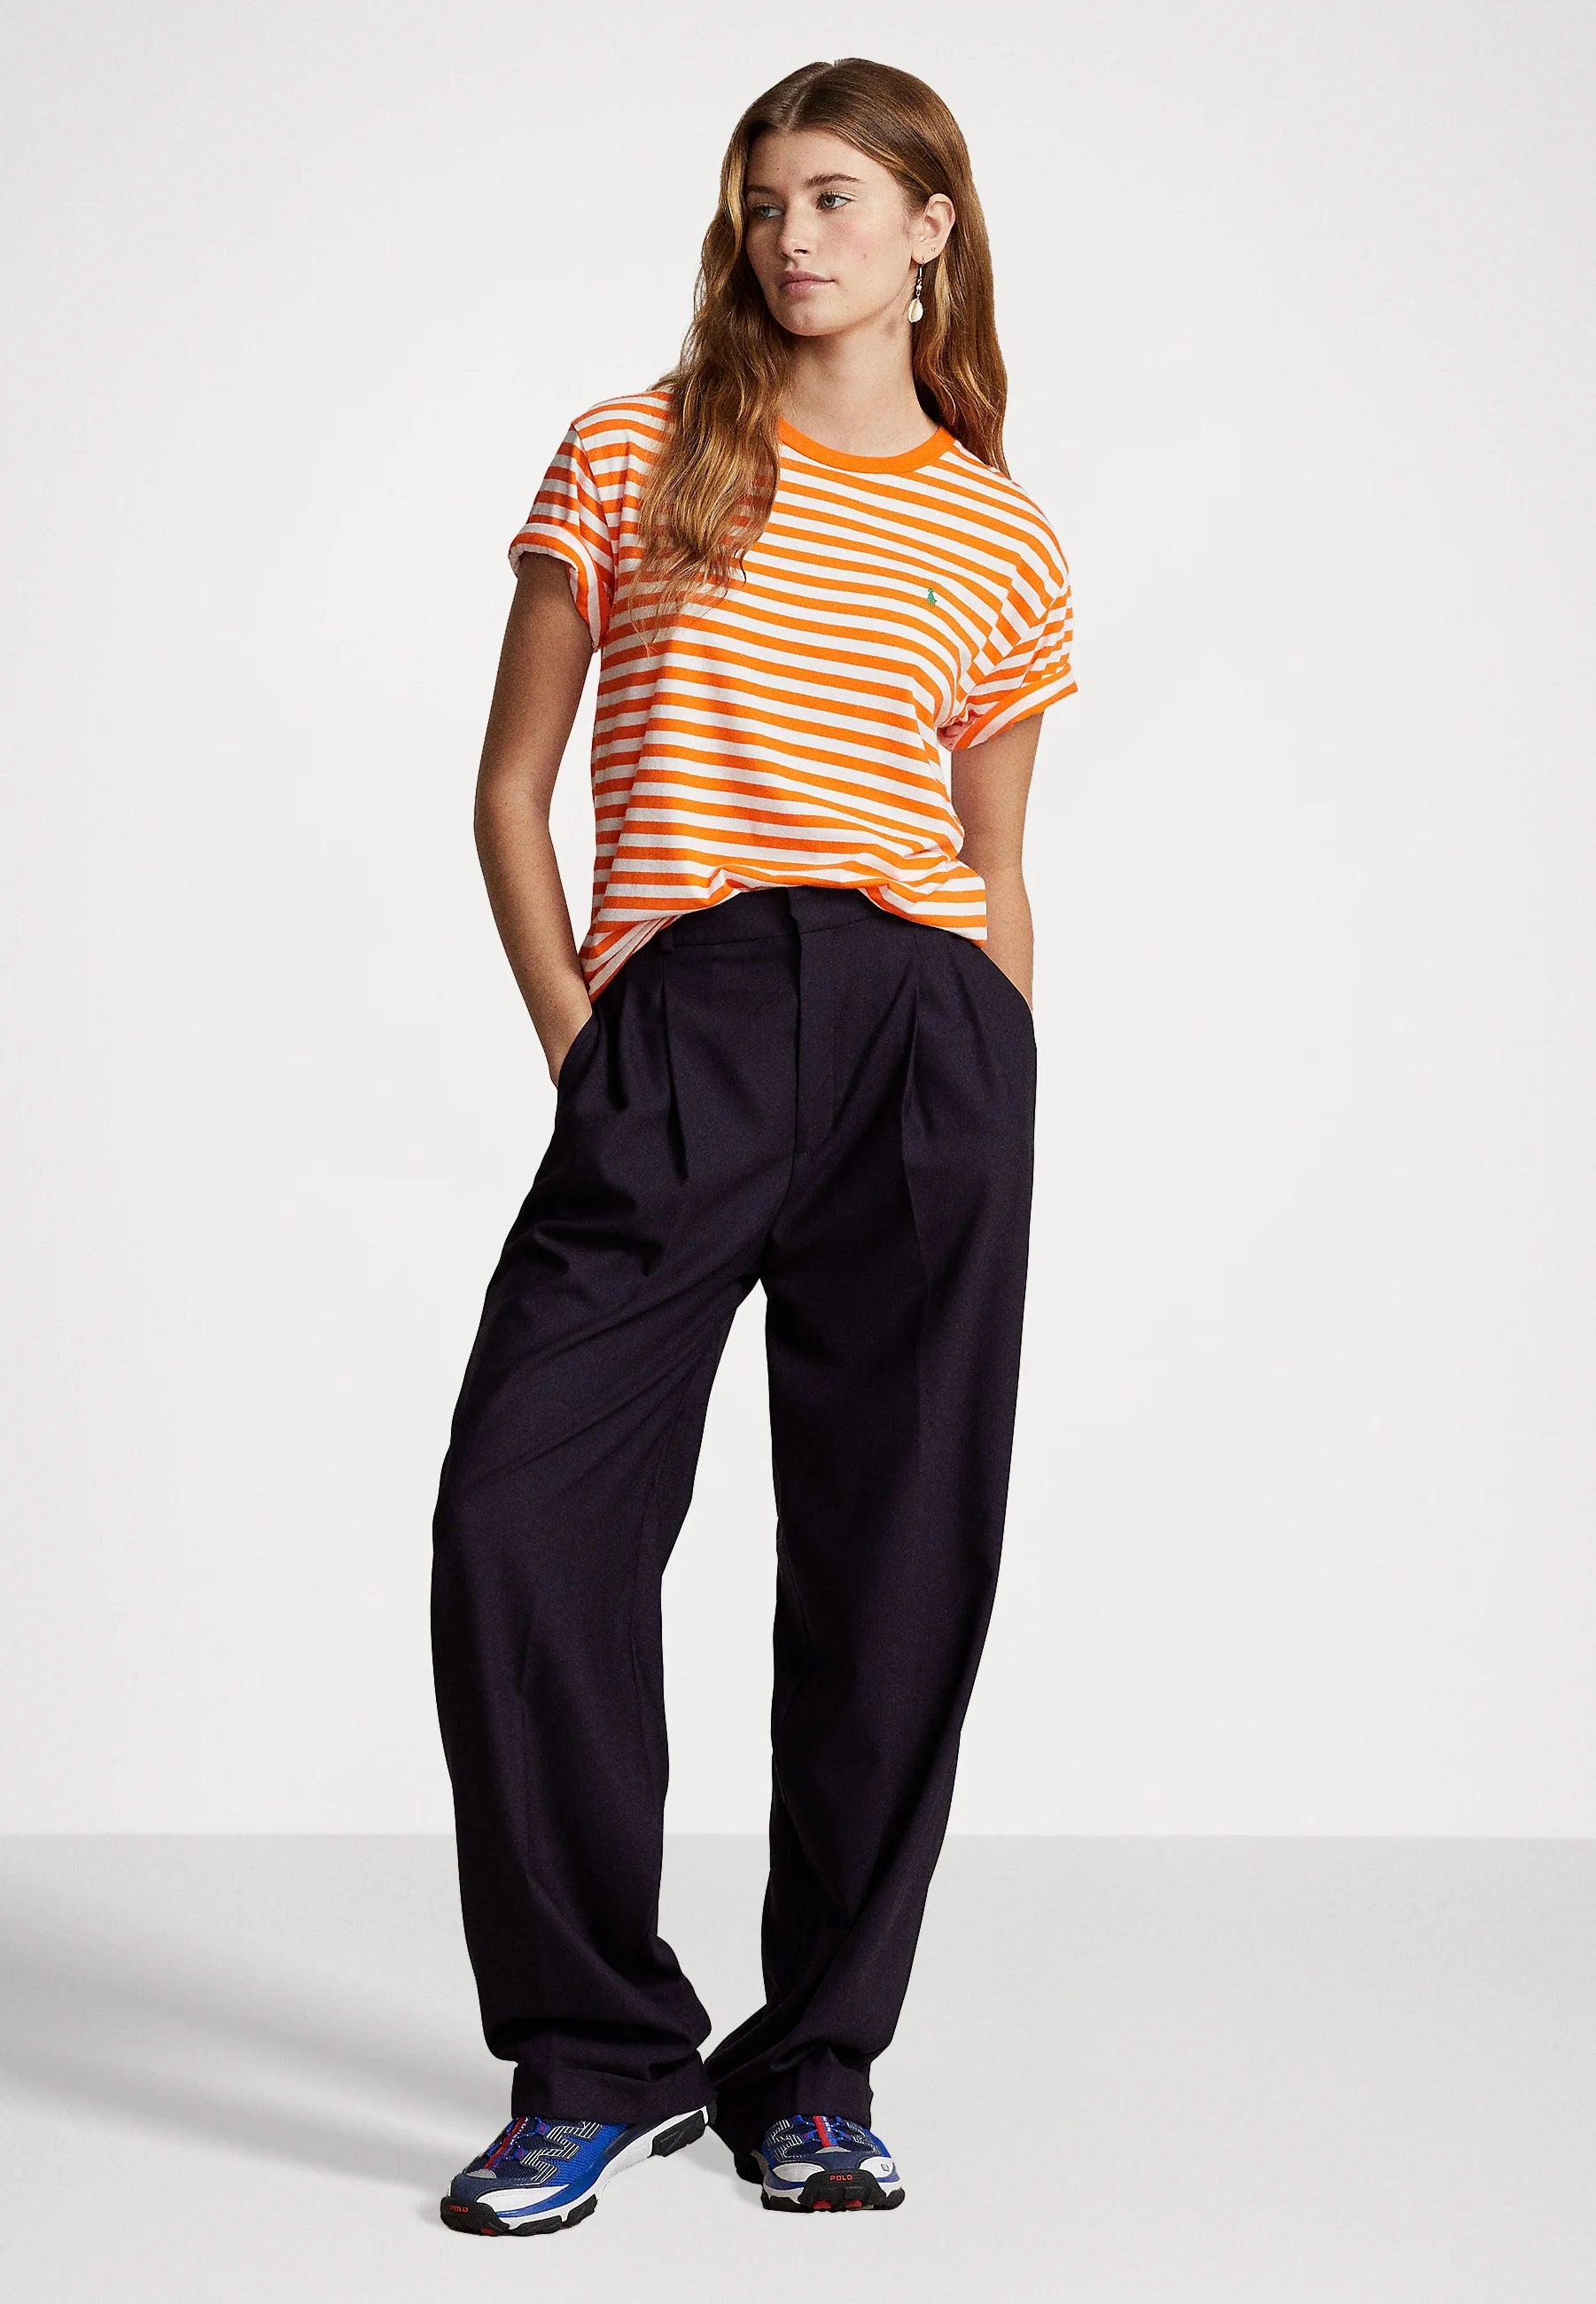 polo-ralph-lauren-t-shirt-stripes-211924293001-orange-white-3